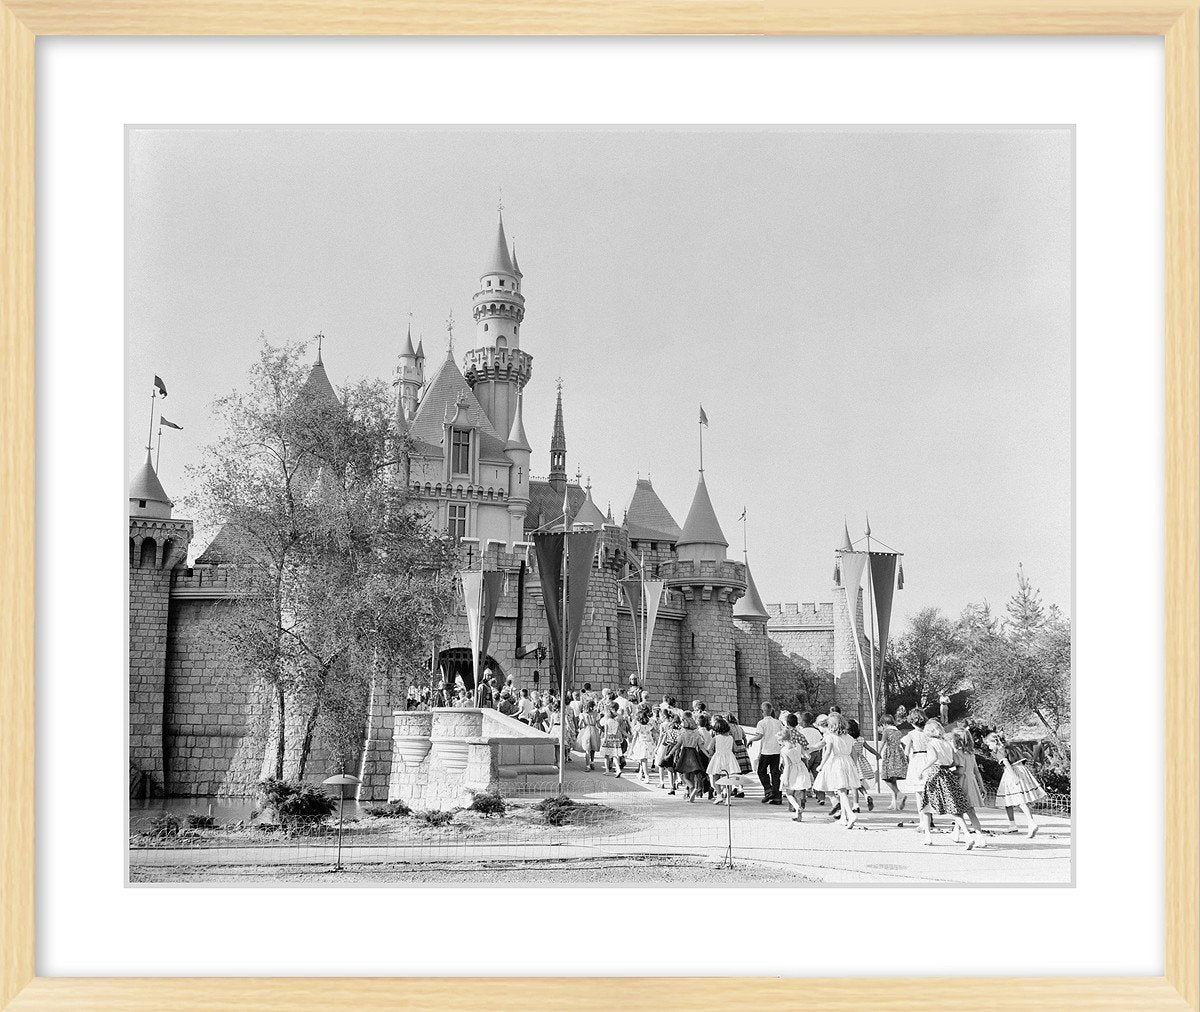 Disneyland Paris, Sleeping Beauty's castle by aka-I-chigo on DeviantArt